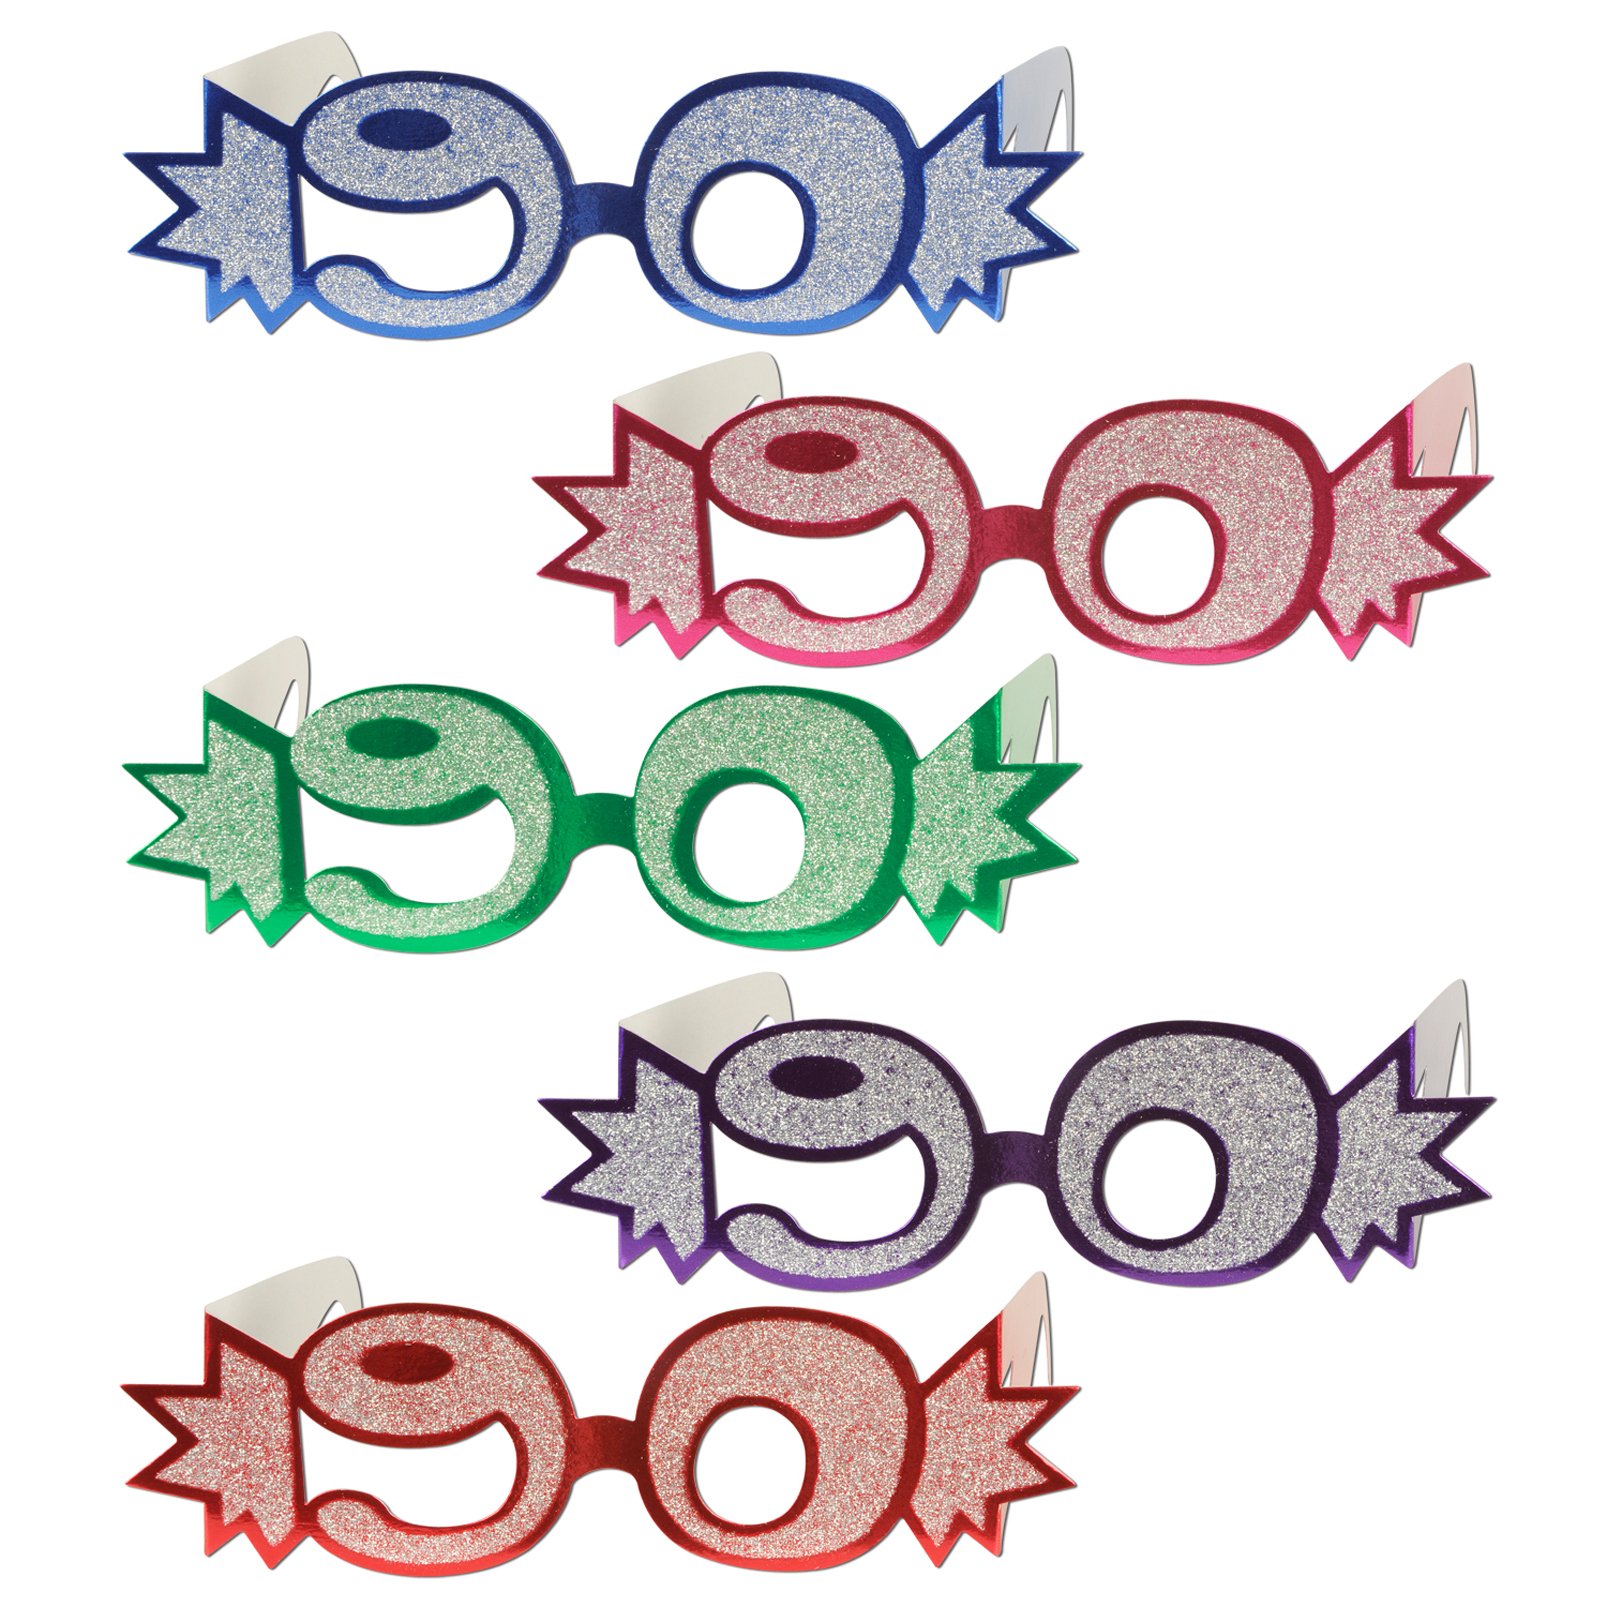 Glittered Foil Eyeglasses "90" Asst. (1 count) - Click Image to Close